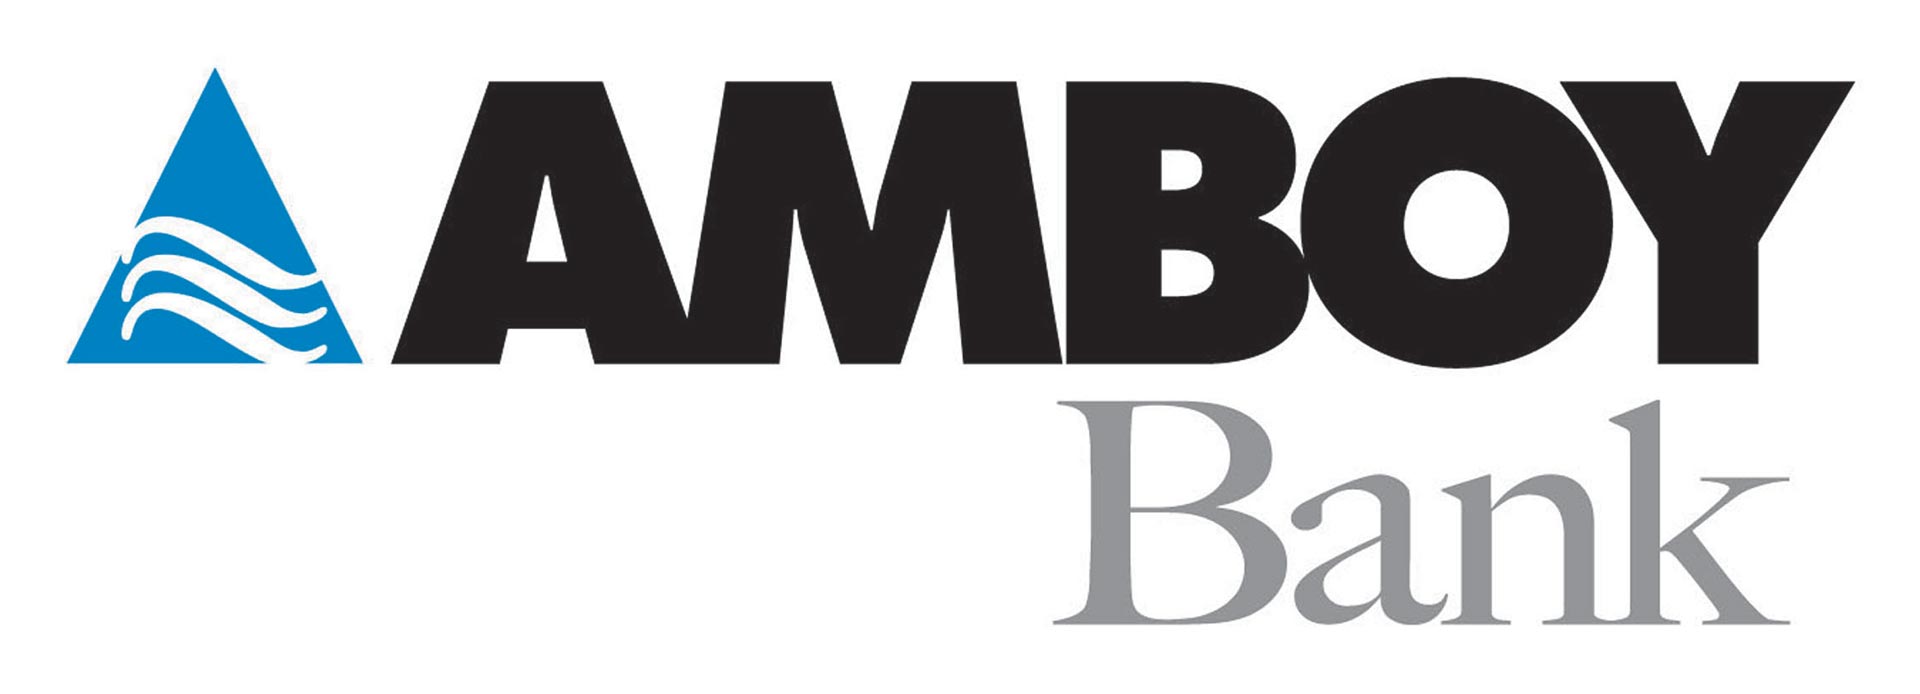 Amboy bank logo